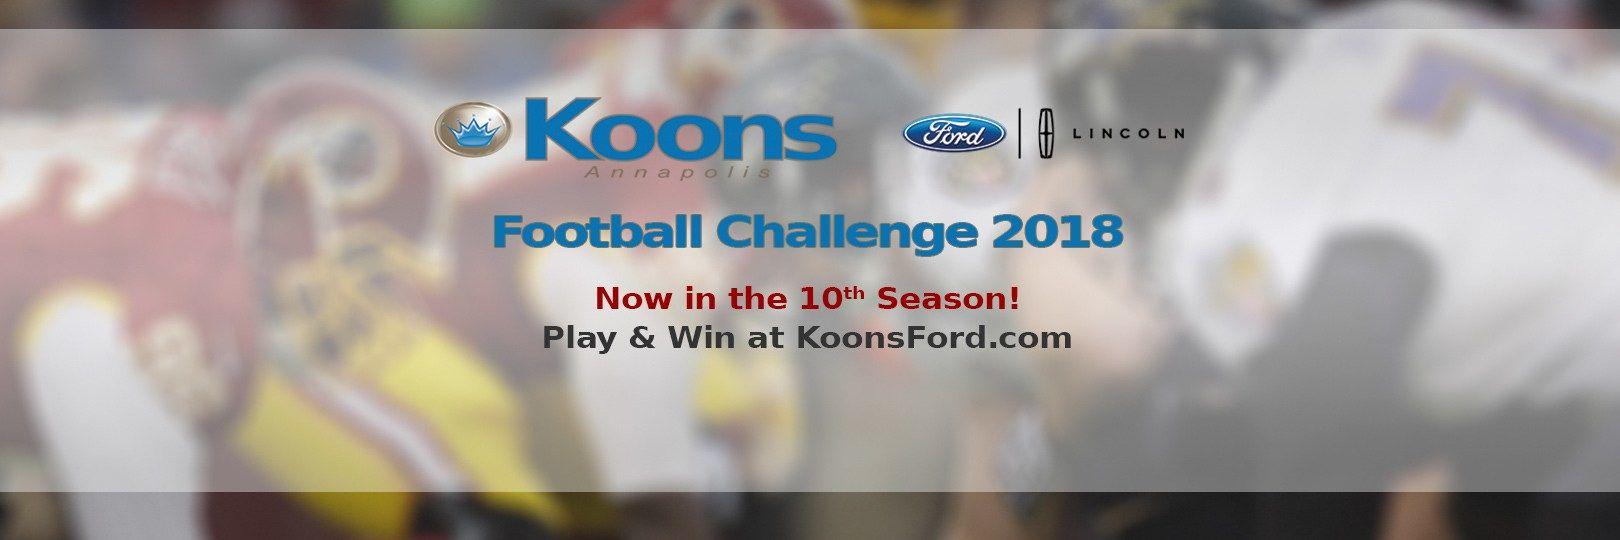 Ford.com Logo - Koons Ford Football Challenge